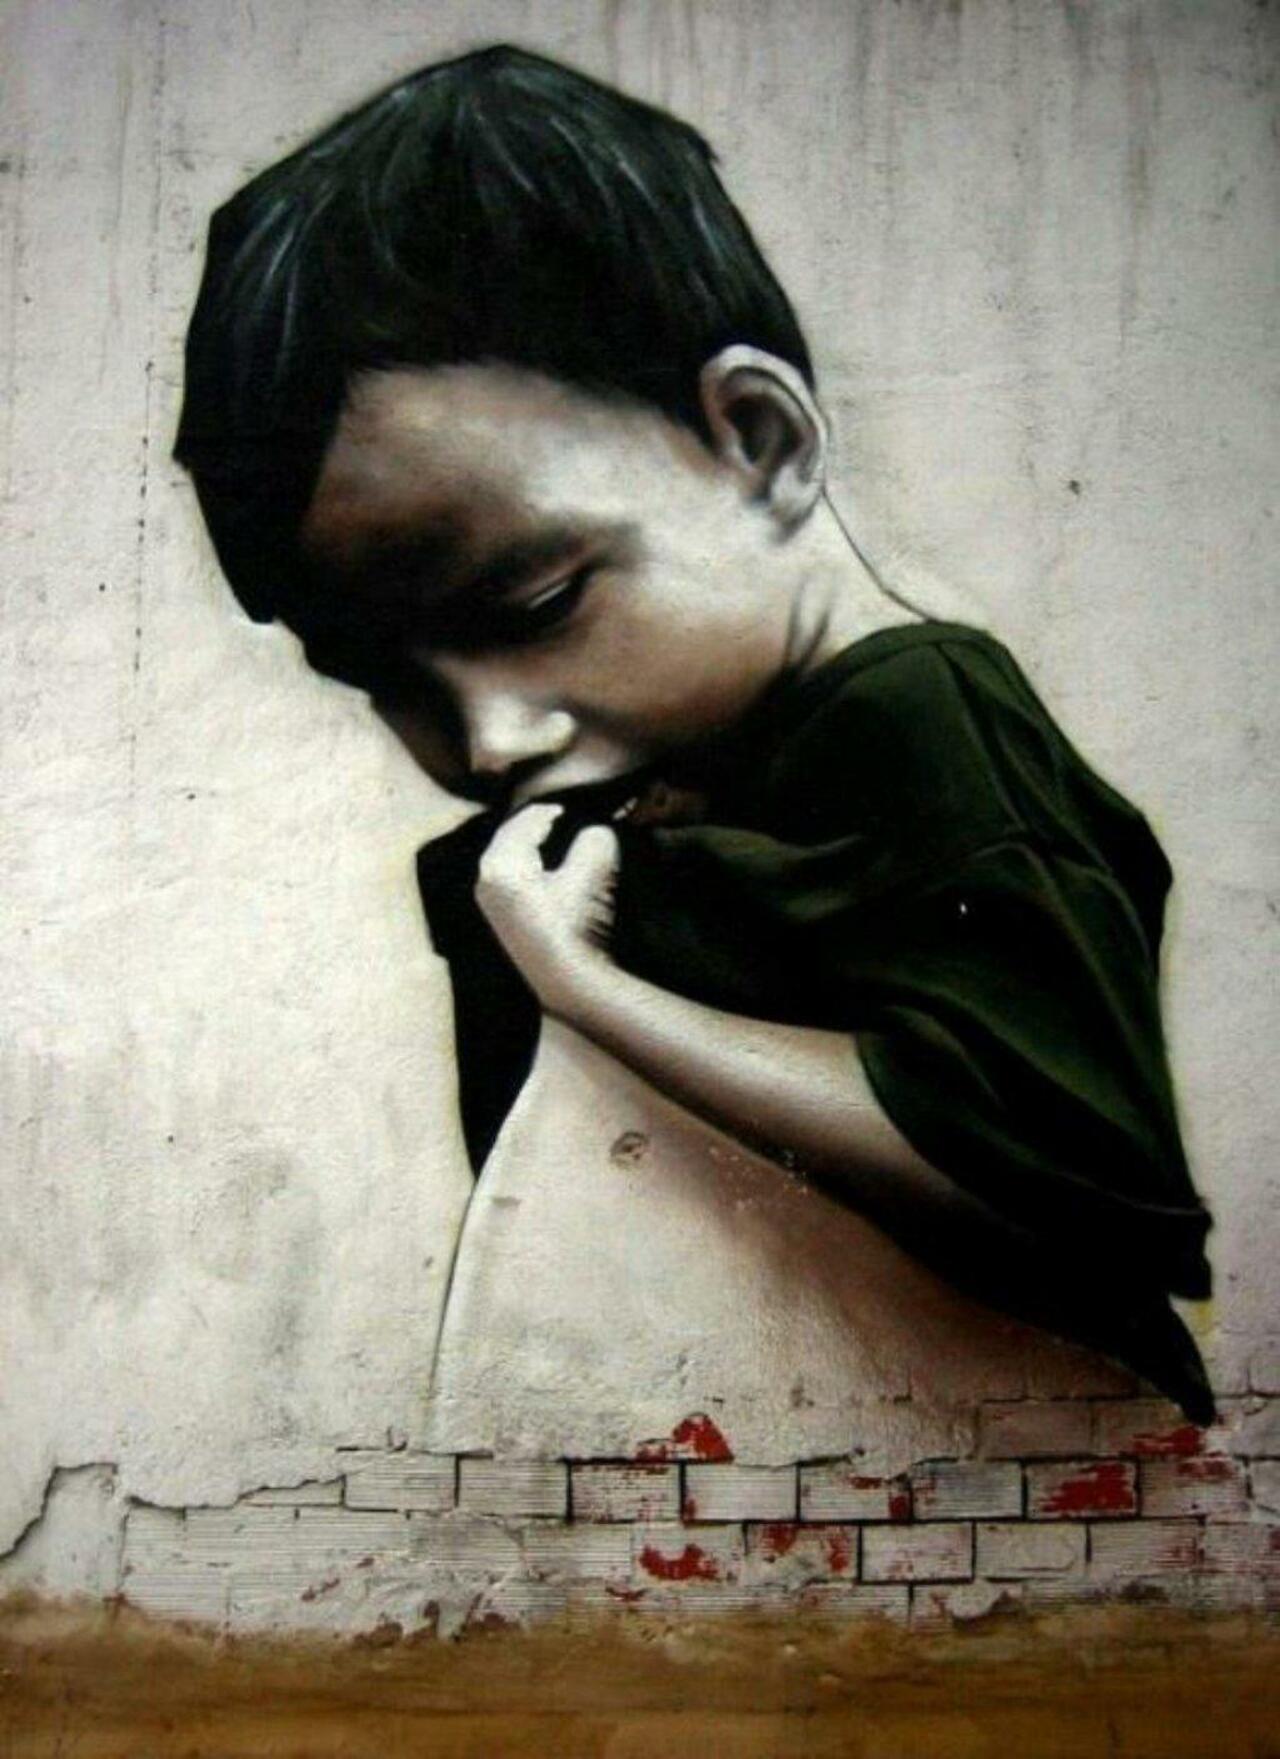 “@Brindille_: #Streetart #urbanart #painting #graffiti
"Children series" by Spanish #artist Igor Rezola aka "Dizebi" http://t.co/M6WZ5zaJs2